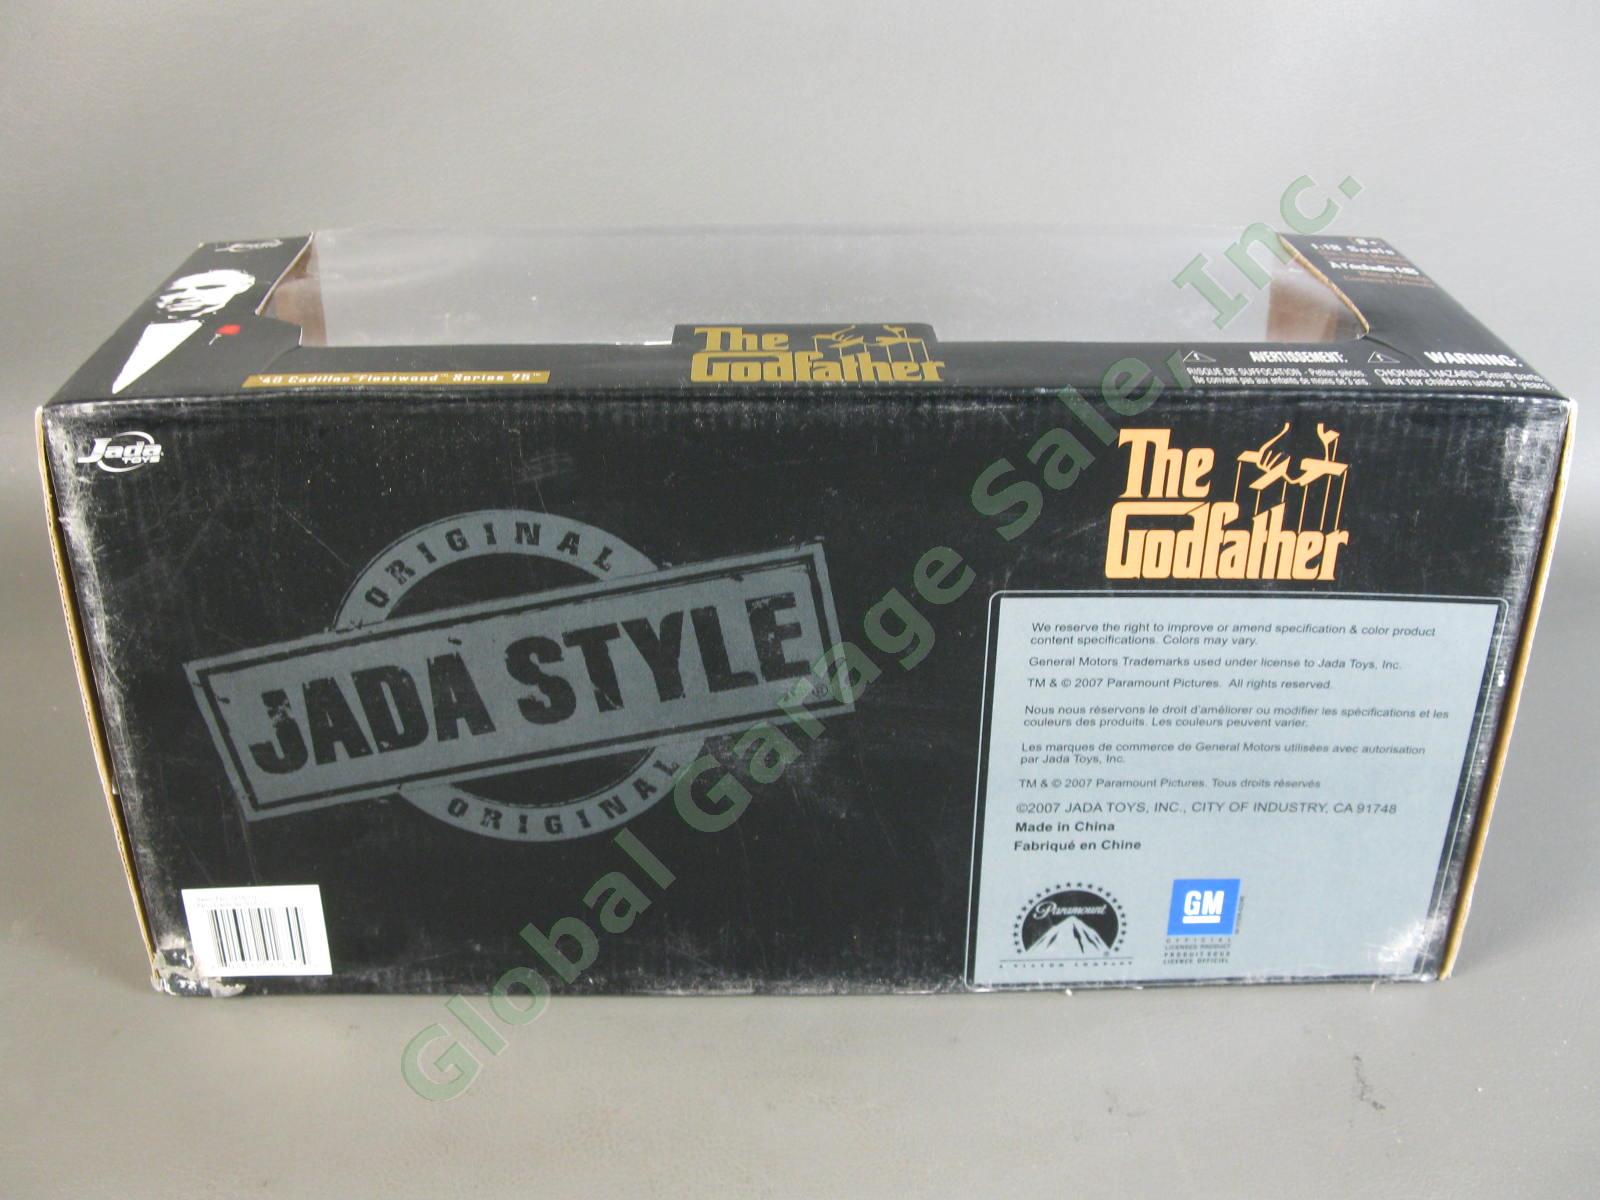 Jada Toys The Godfather 1940 Cadillac Fleetwood Series 75 Die Cast Model Car NR 5